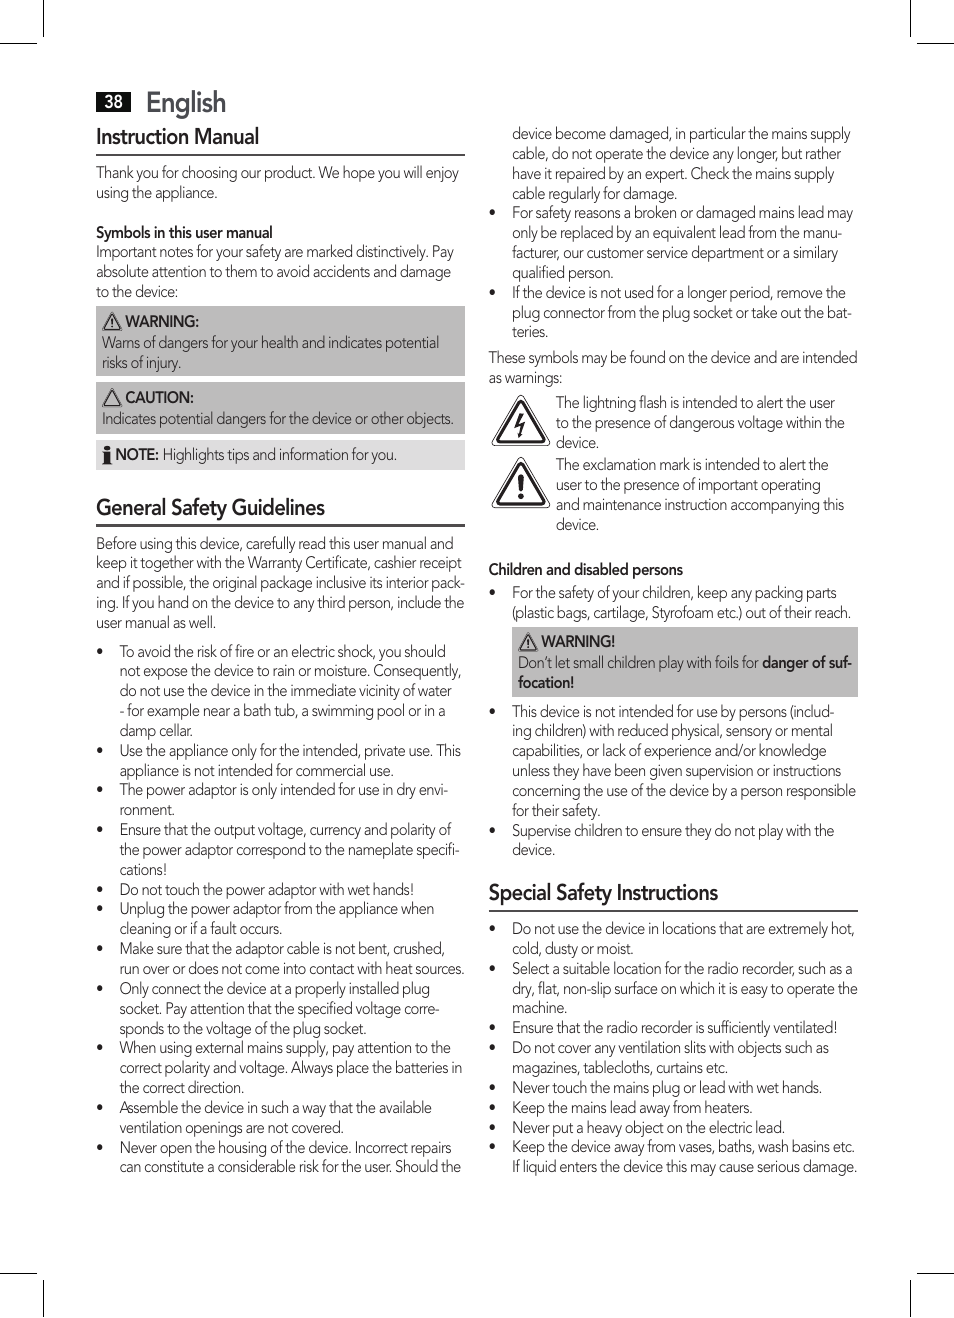 English, Instruction manual, General safety guidelines | AEG DAB 4138  schwarz User Manual | Page 38 / 46 | Original mode